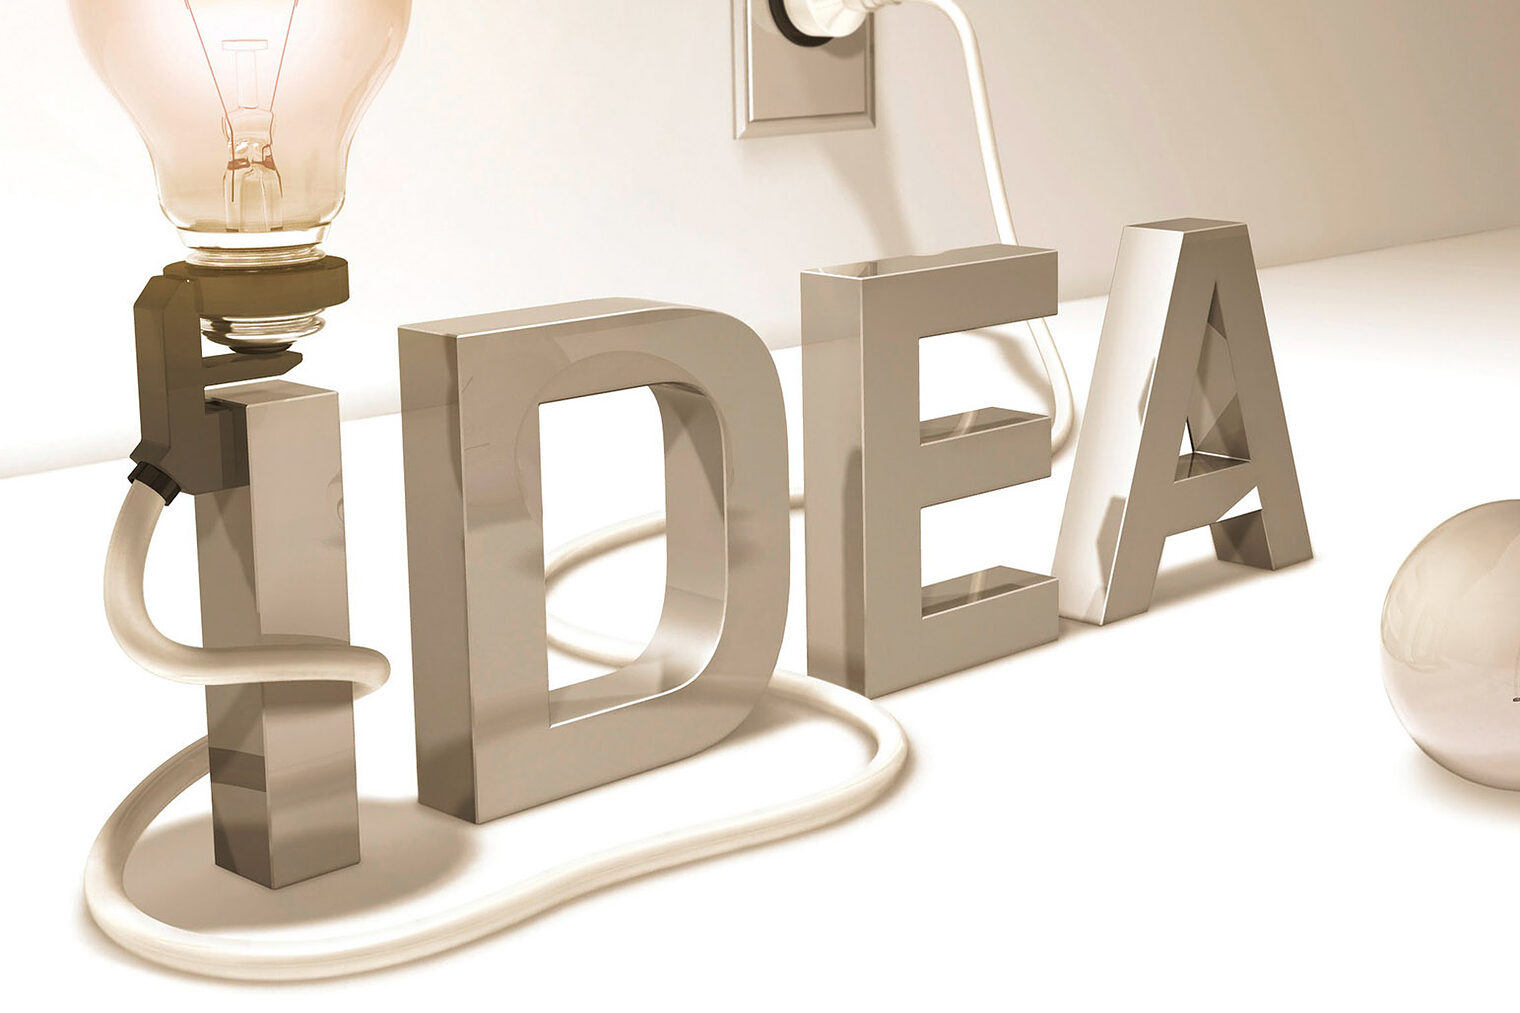 Idee, Idea, Innovation, Innovationspreis